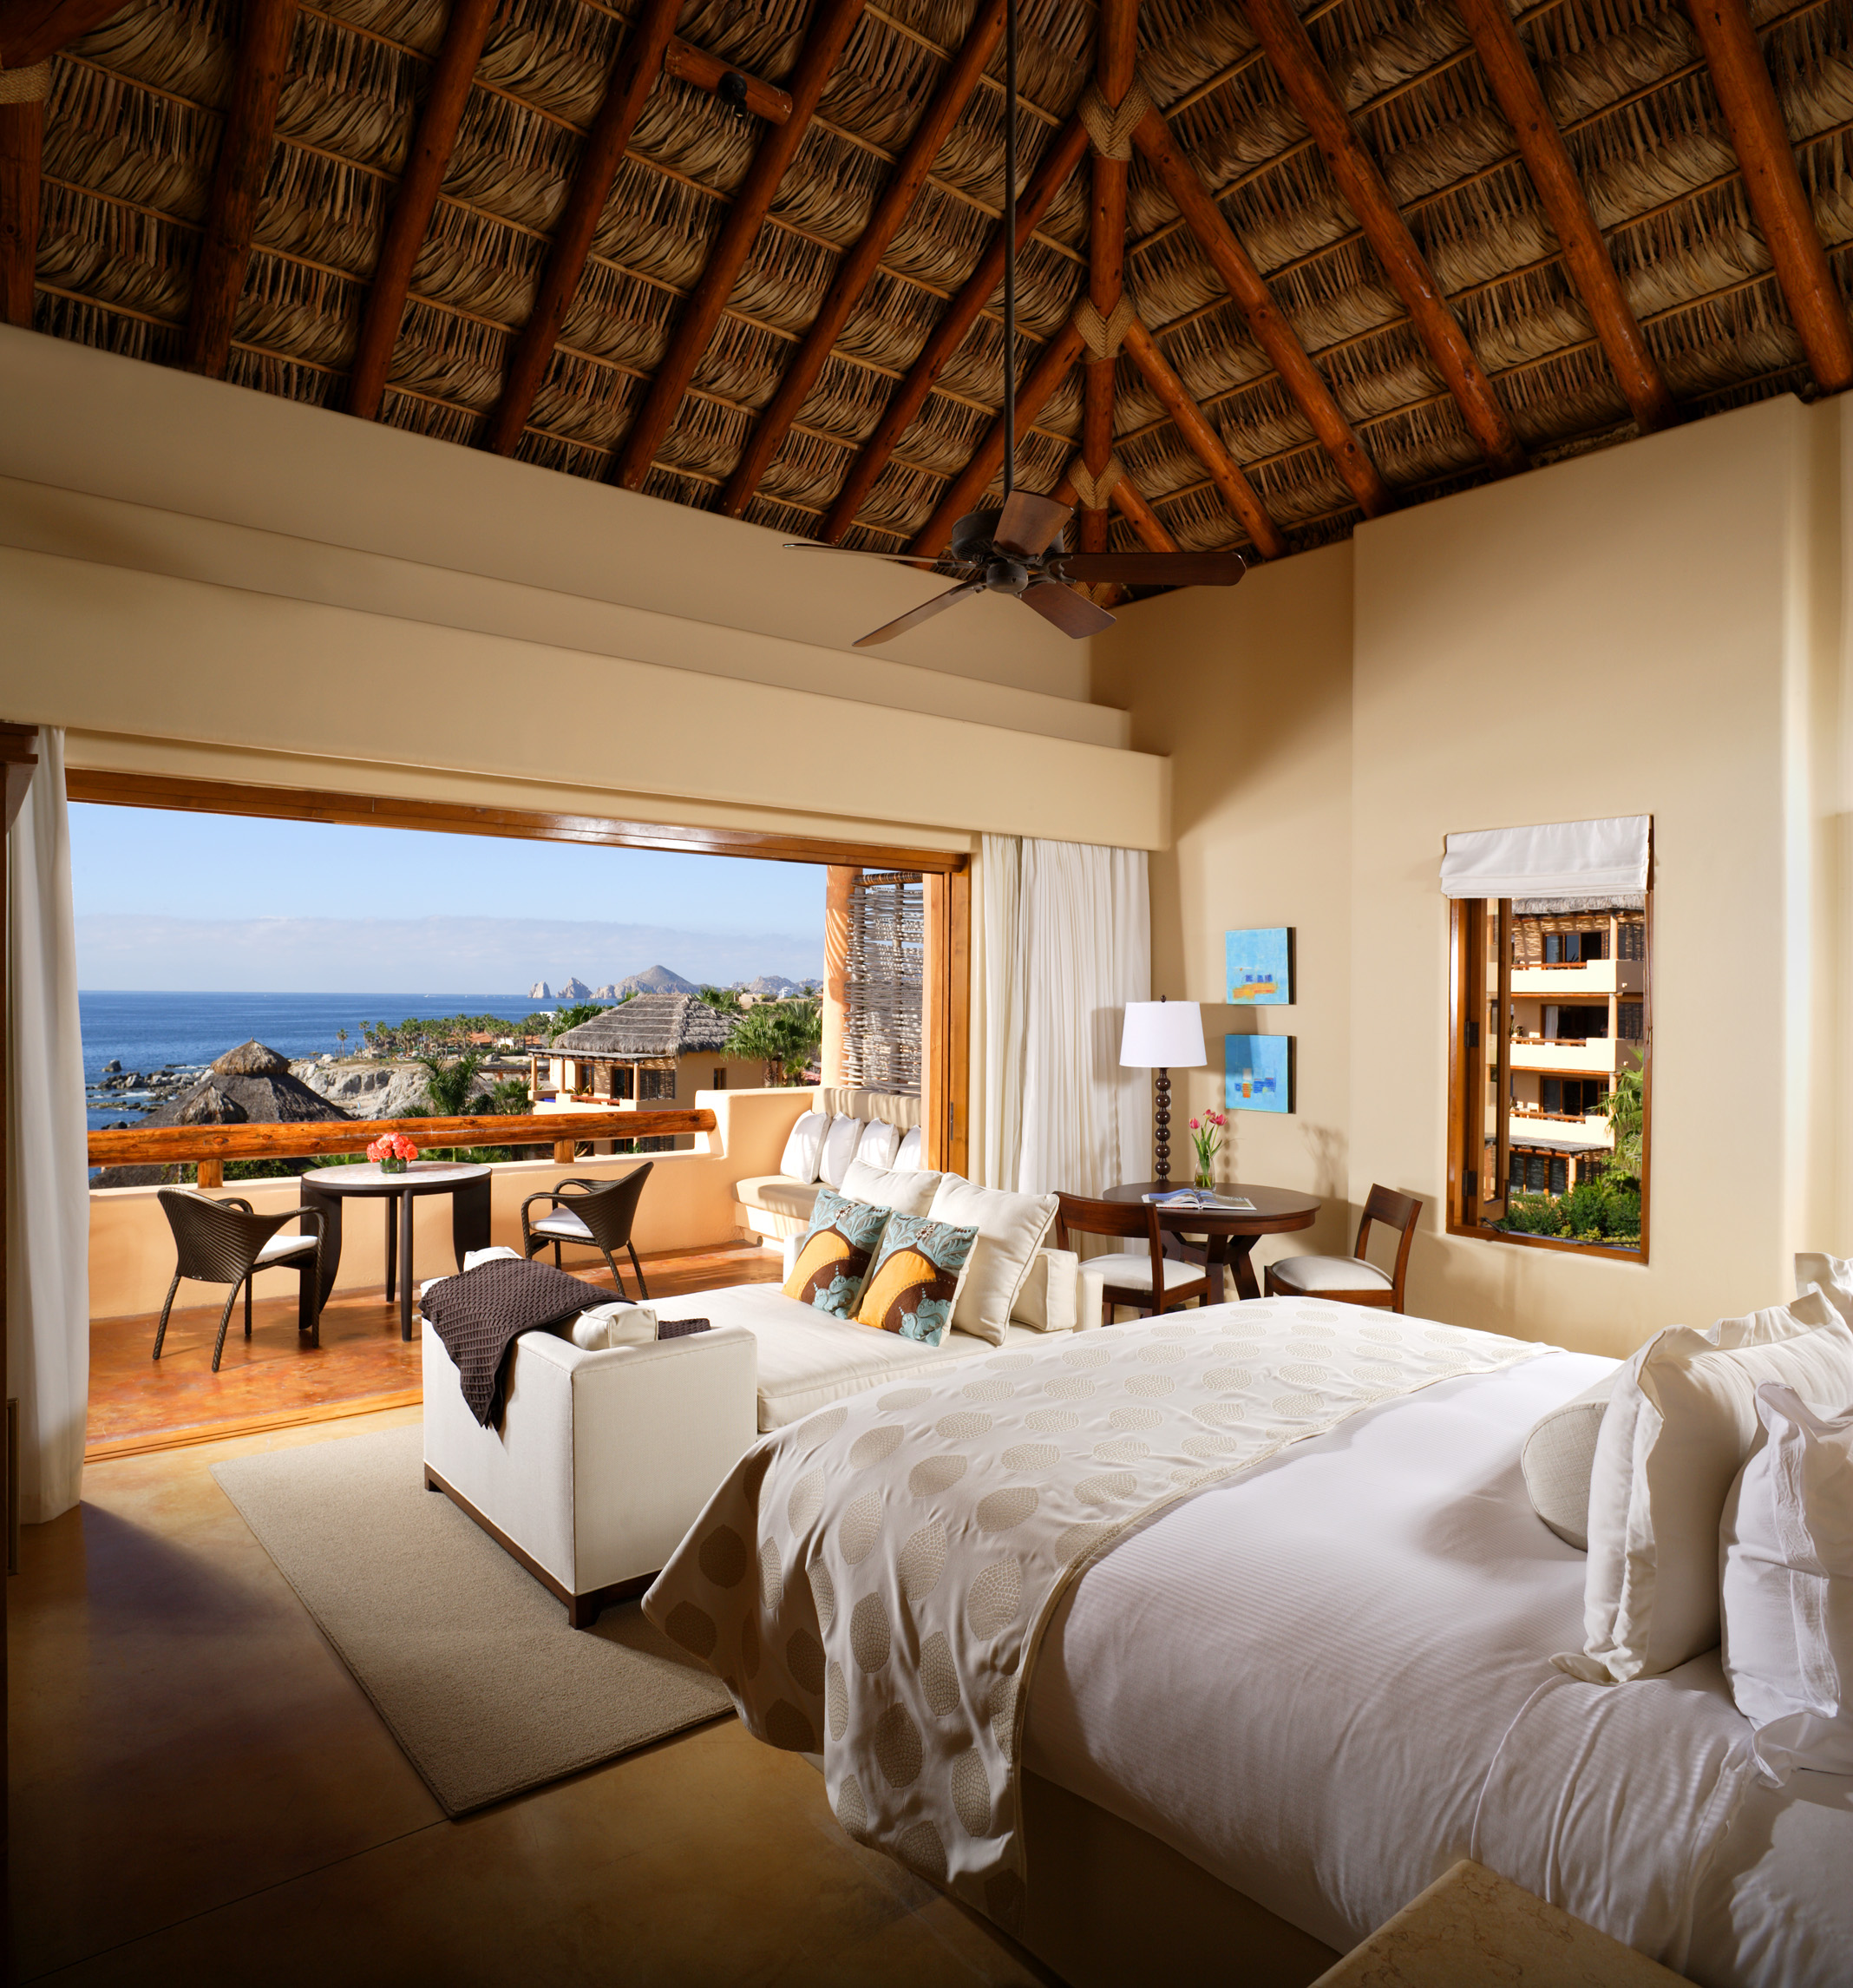 Esperanza, An Auberge Resort located on a private beach in Cabo San Lucas, Mexico